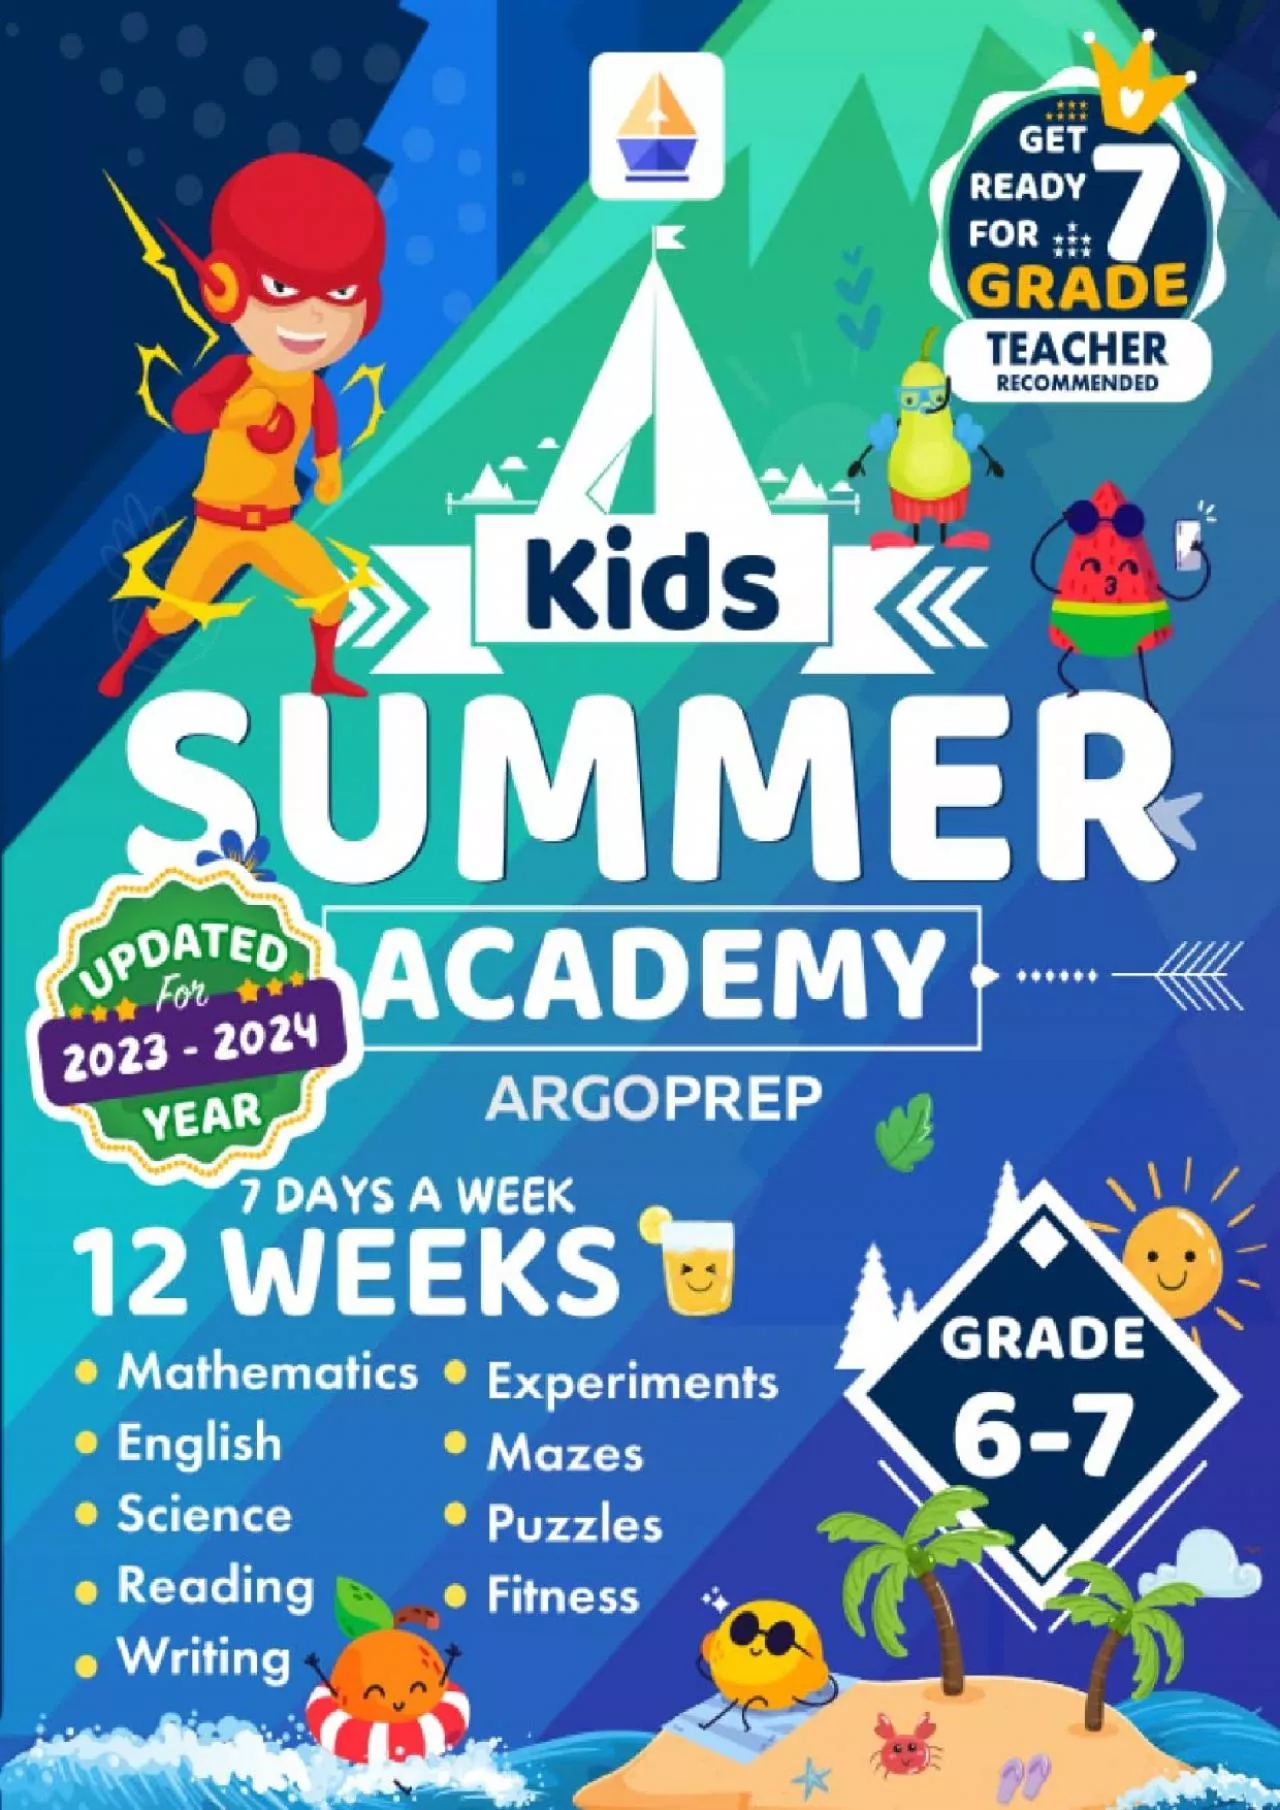 [READ] Kids Summer Academy by ArgoPrep - Grades 6-7: 12 Weeks of Math, Reading, Science,